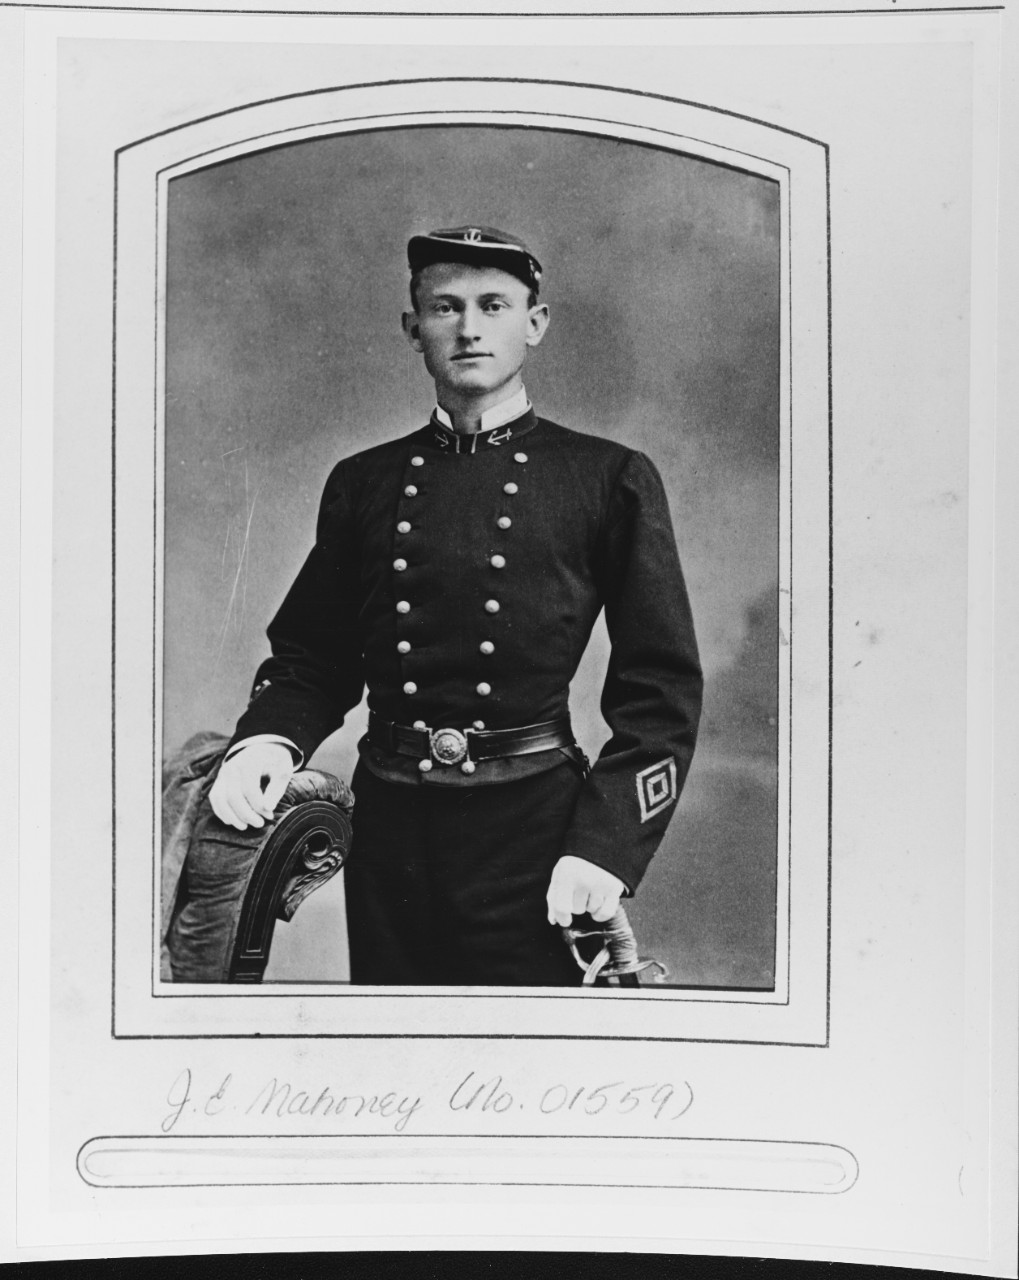 Colonel James Edward Mahoney, USMC